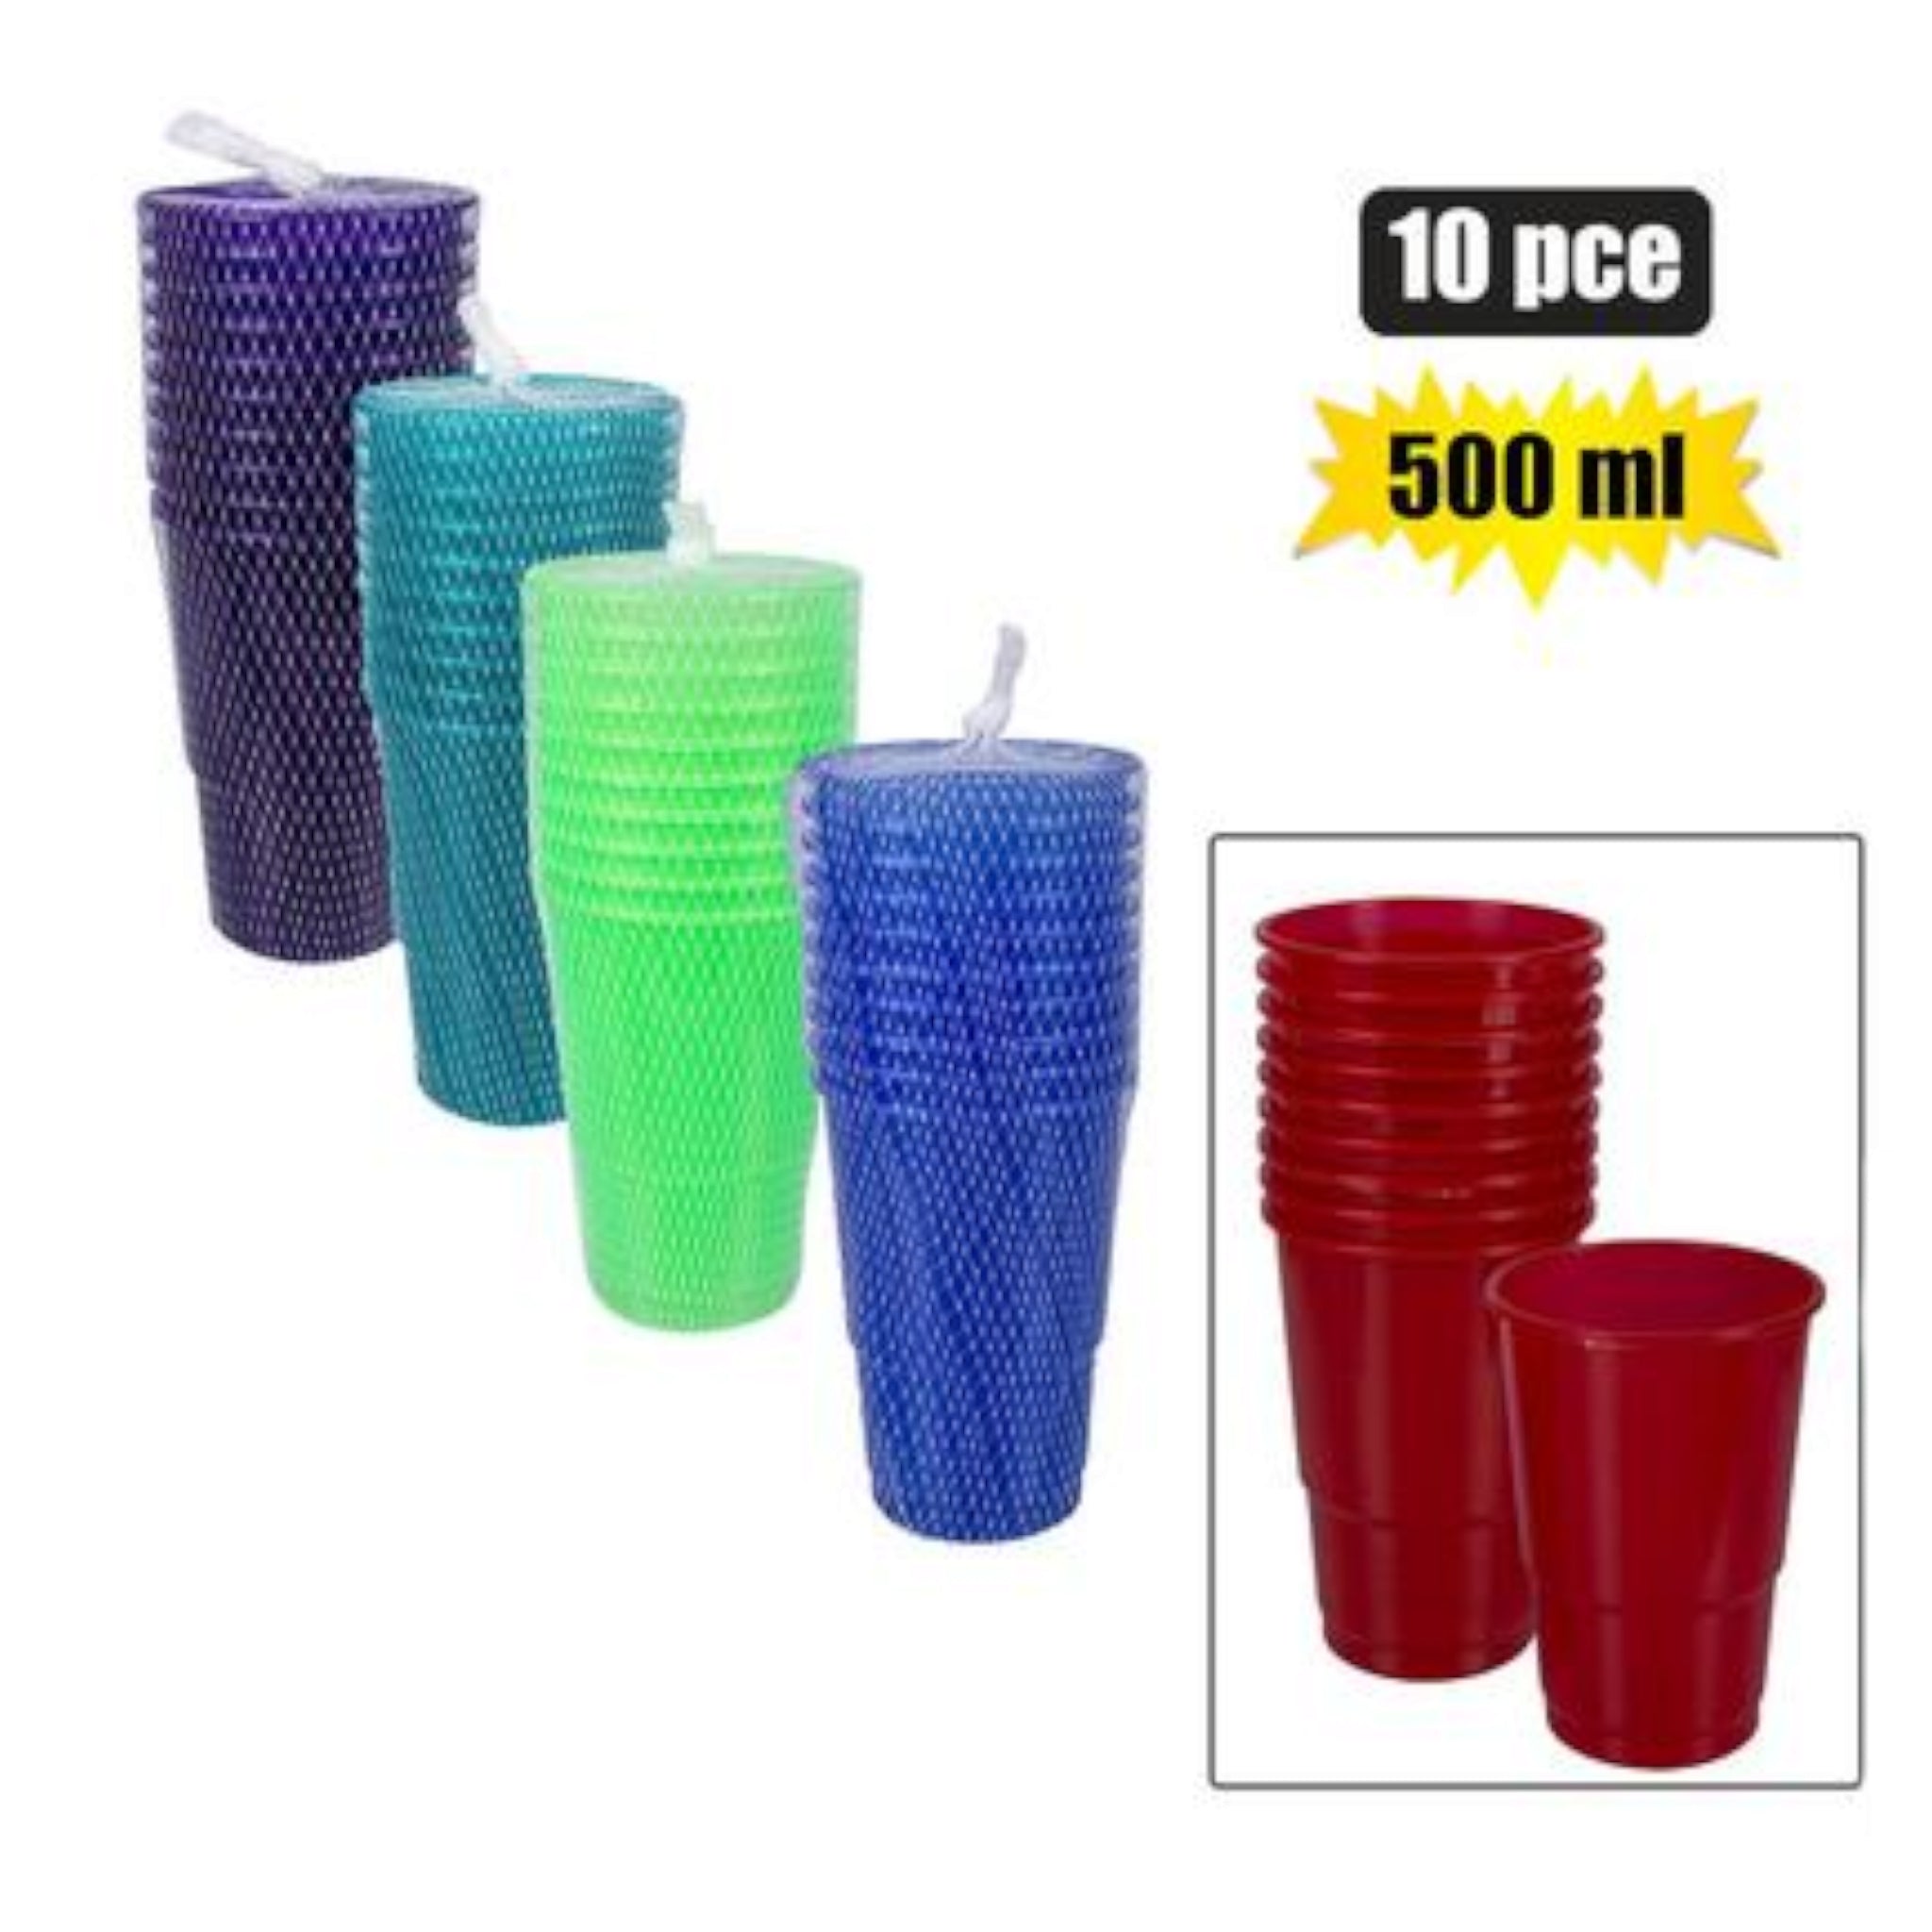 500ml Milla Plastic Cup Net Cover 10pc